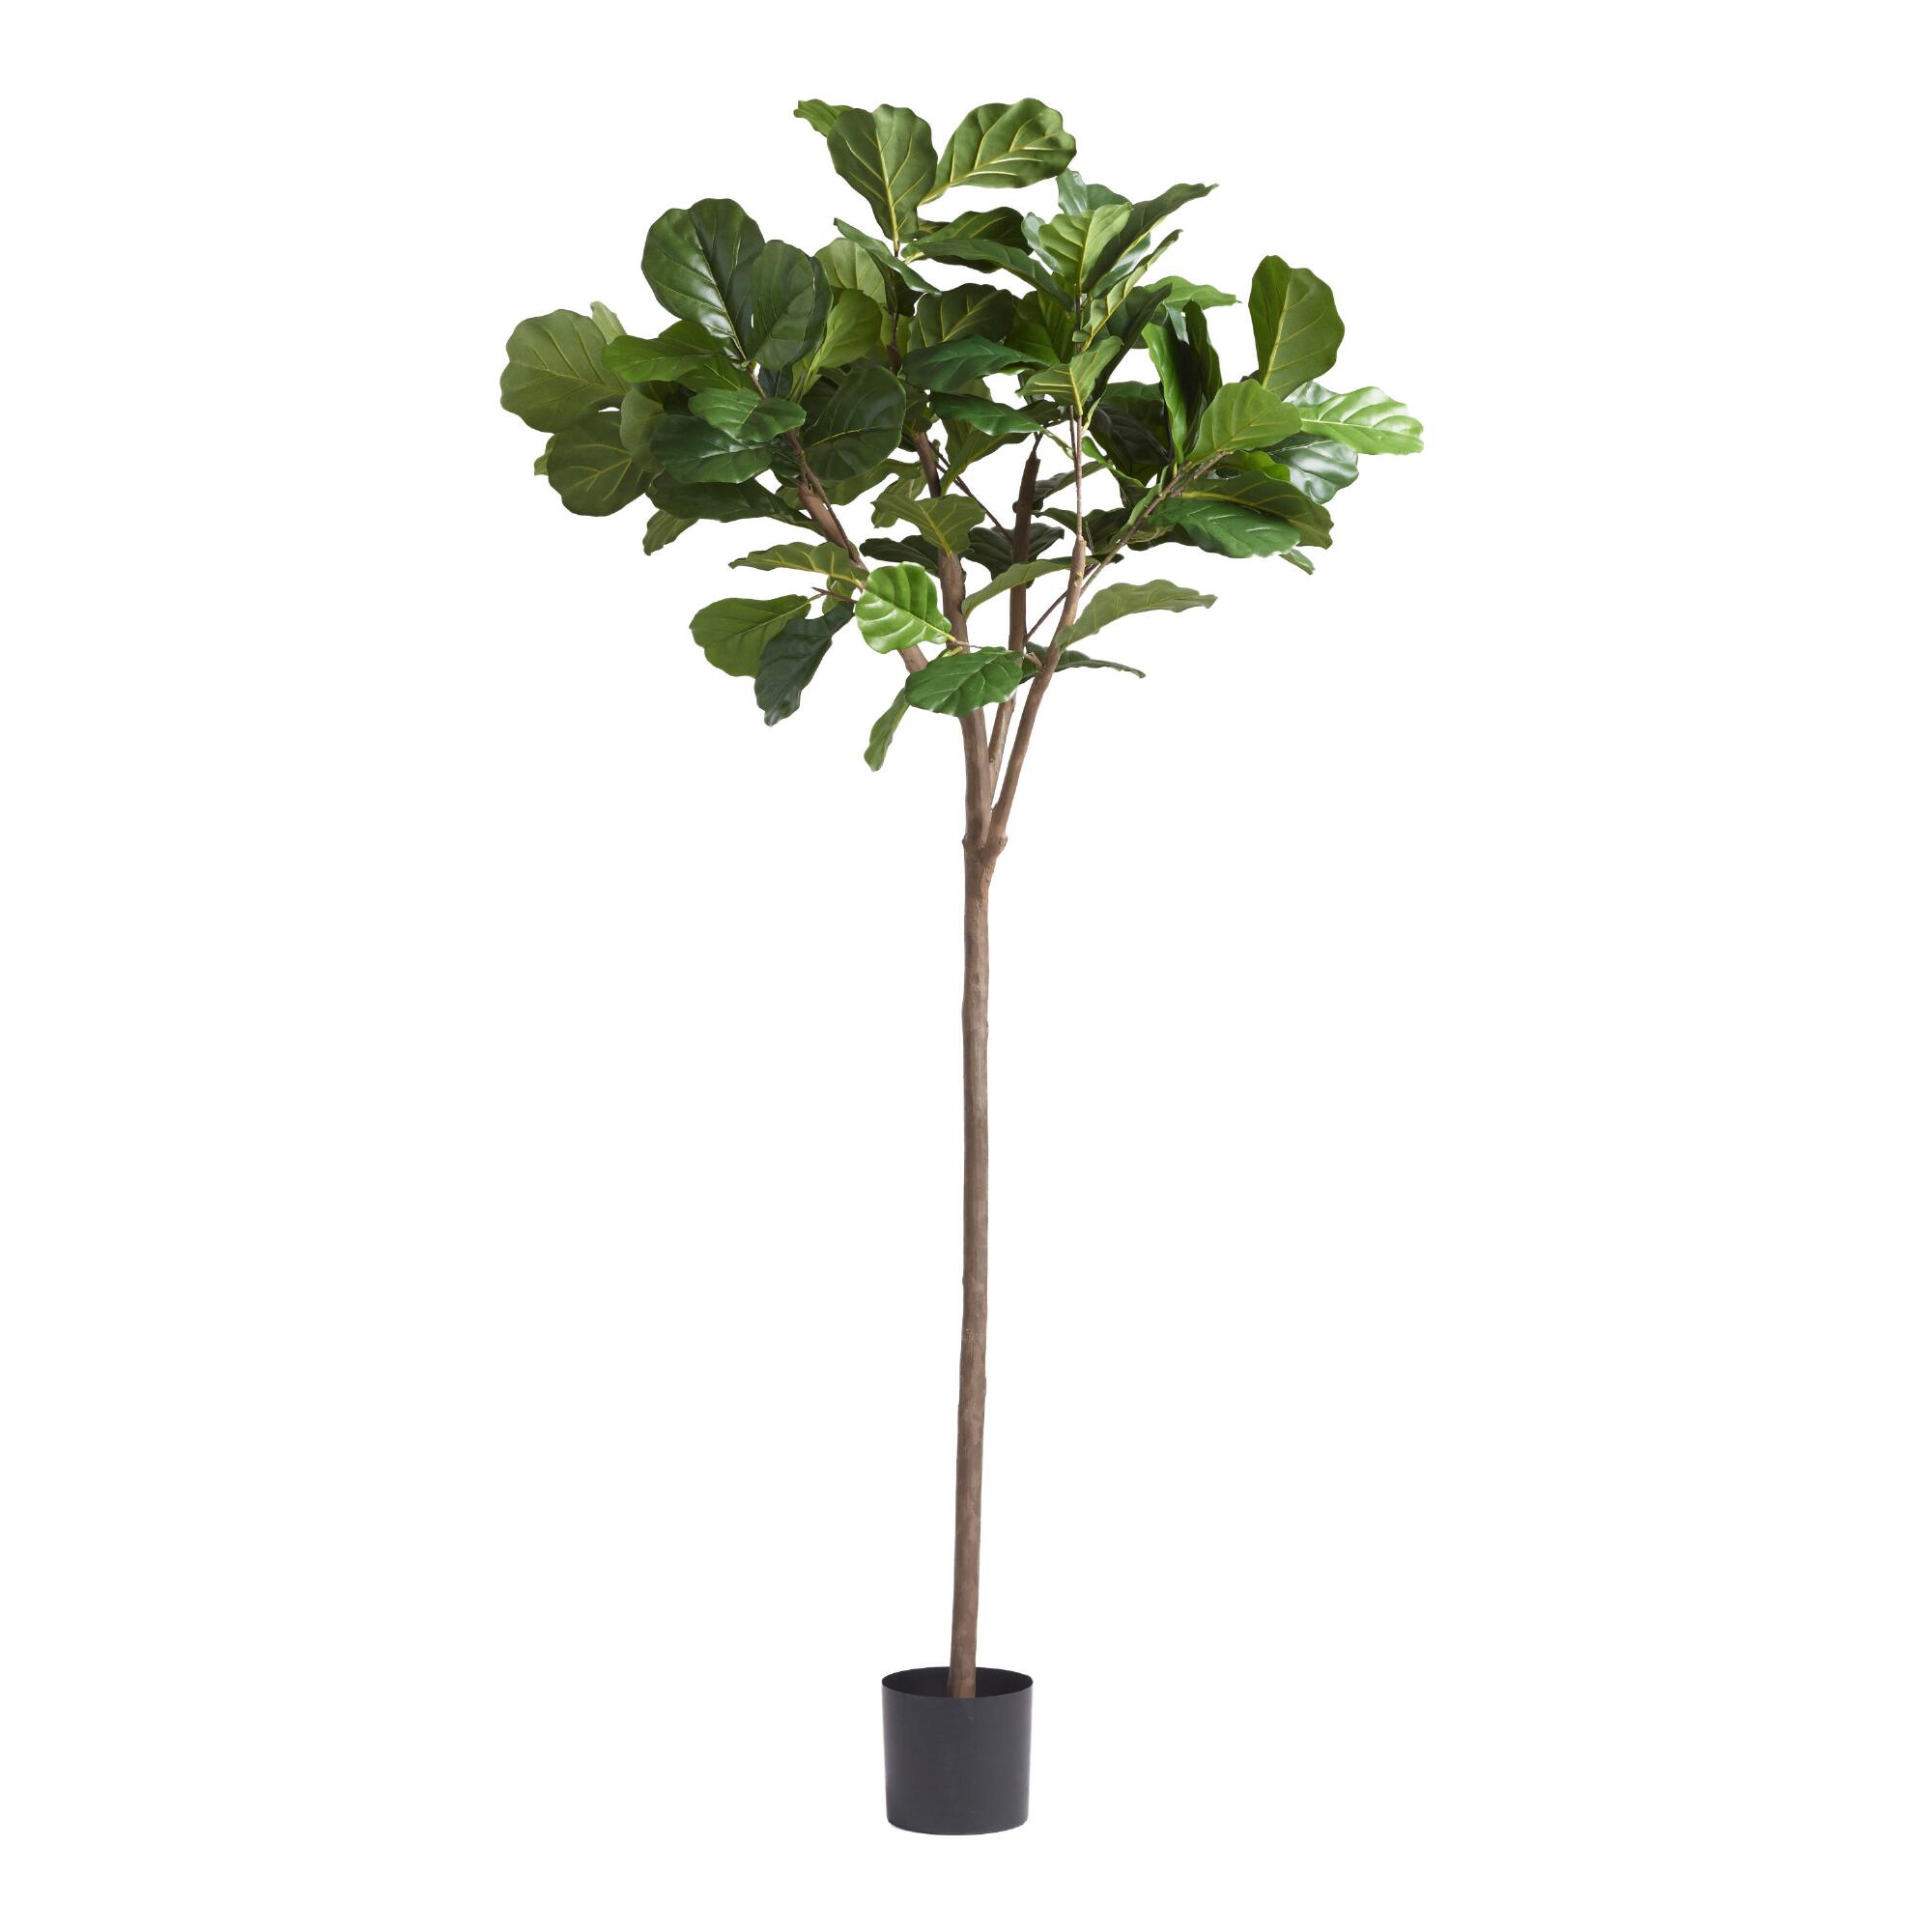 6 Foot Faux Fiddle Leaf Fig Tree: Green by World Market